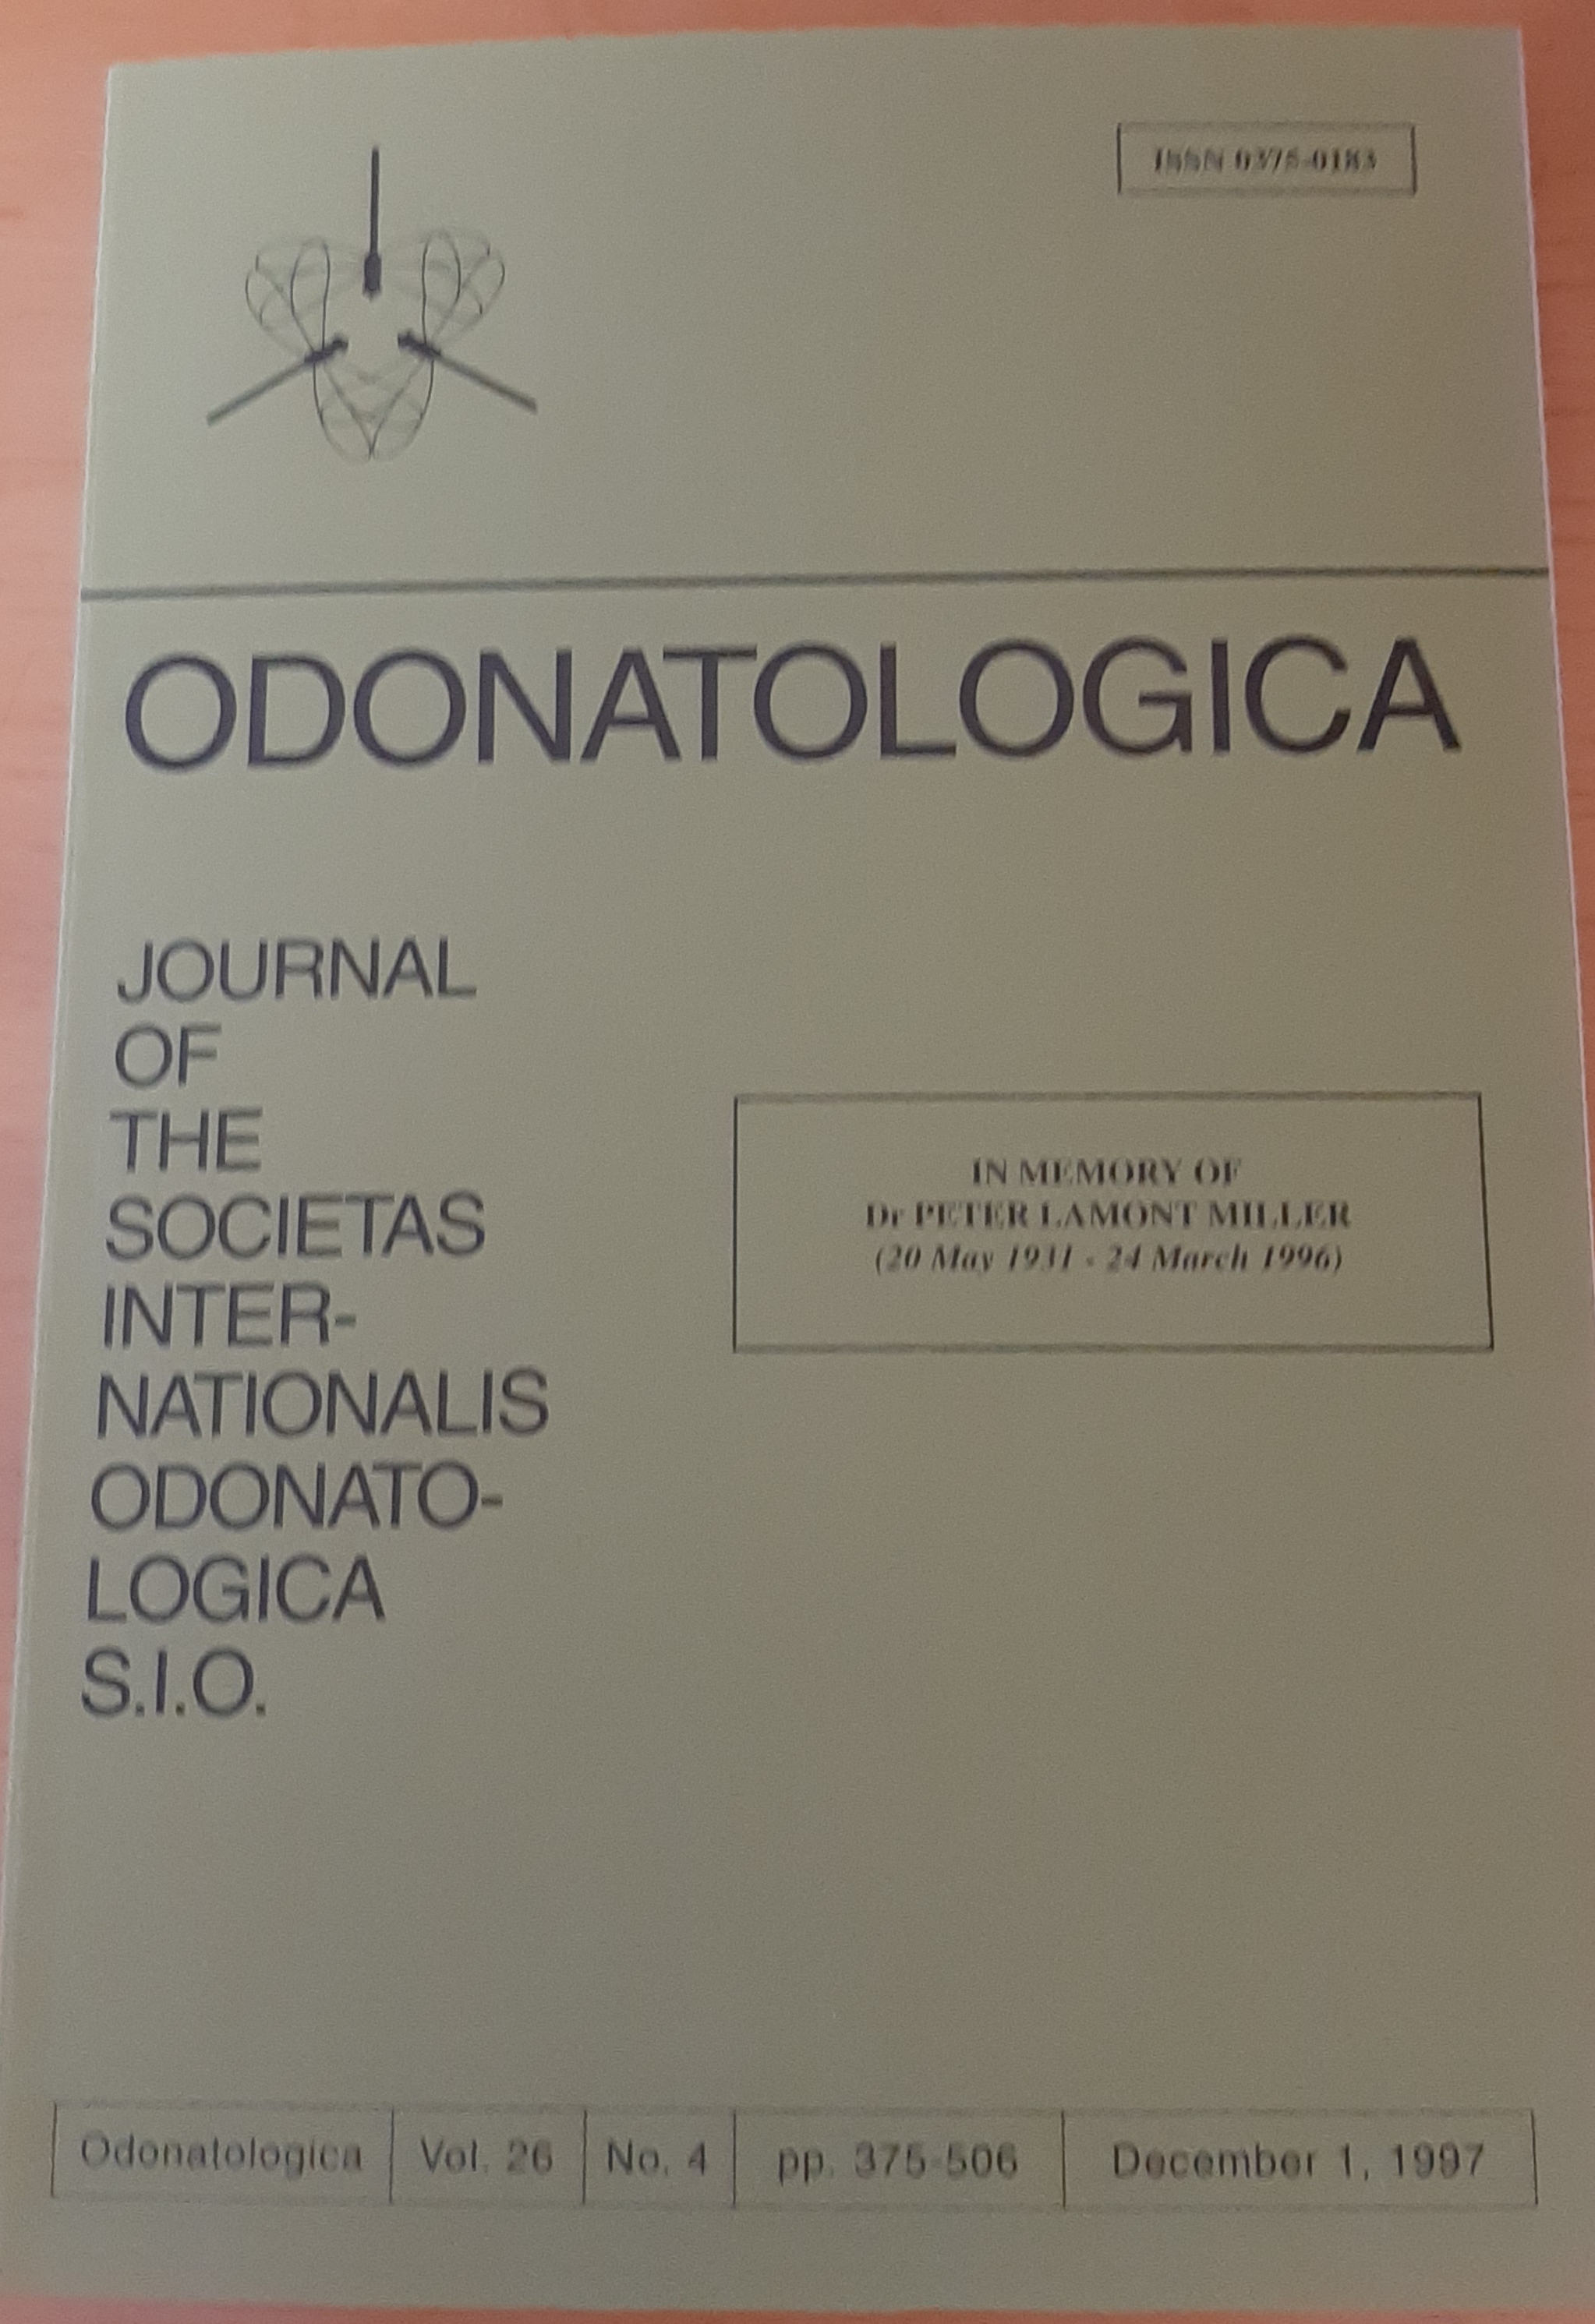 Odonatologica 1997/26. évf. 4. szám Journal of the Societas Internationalis Odonatologica S.I.O. (Rippl-Rónai Múzeum RR-F)